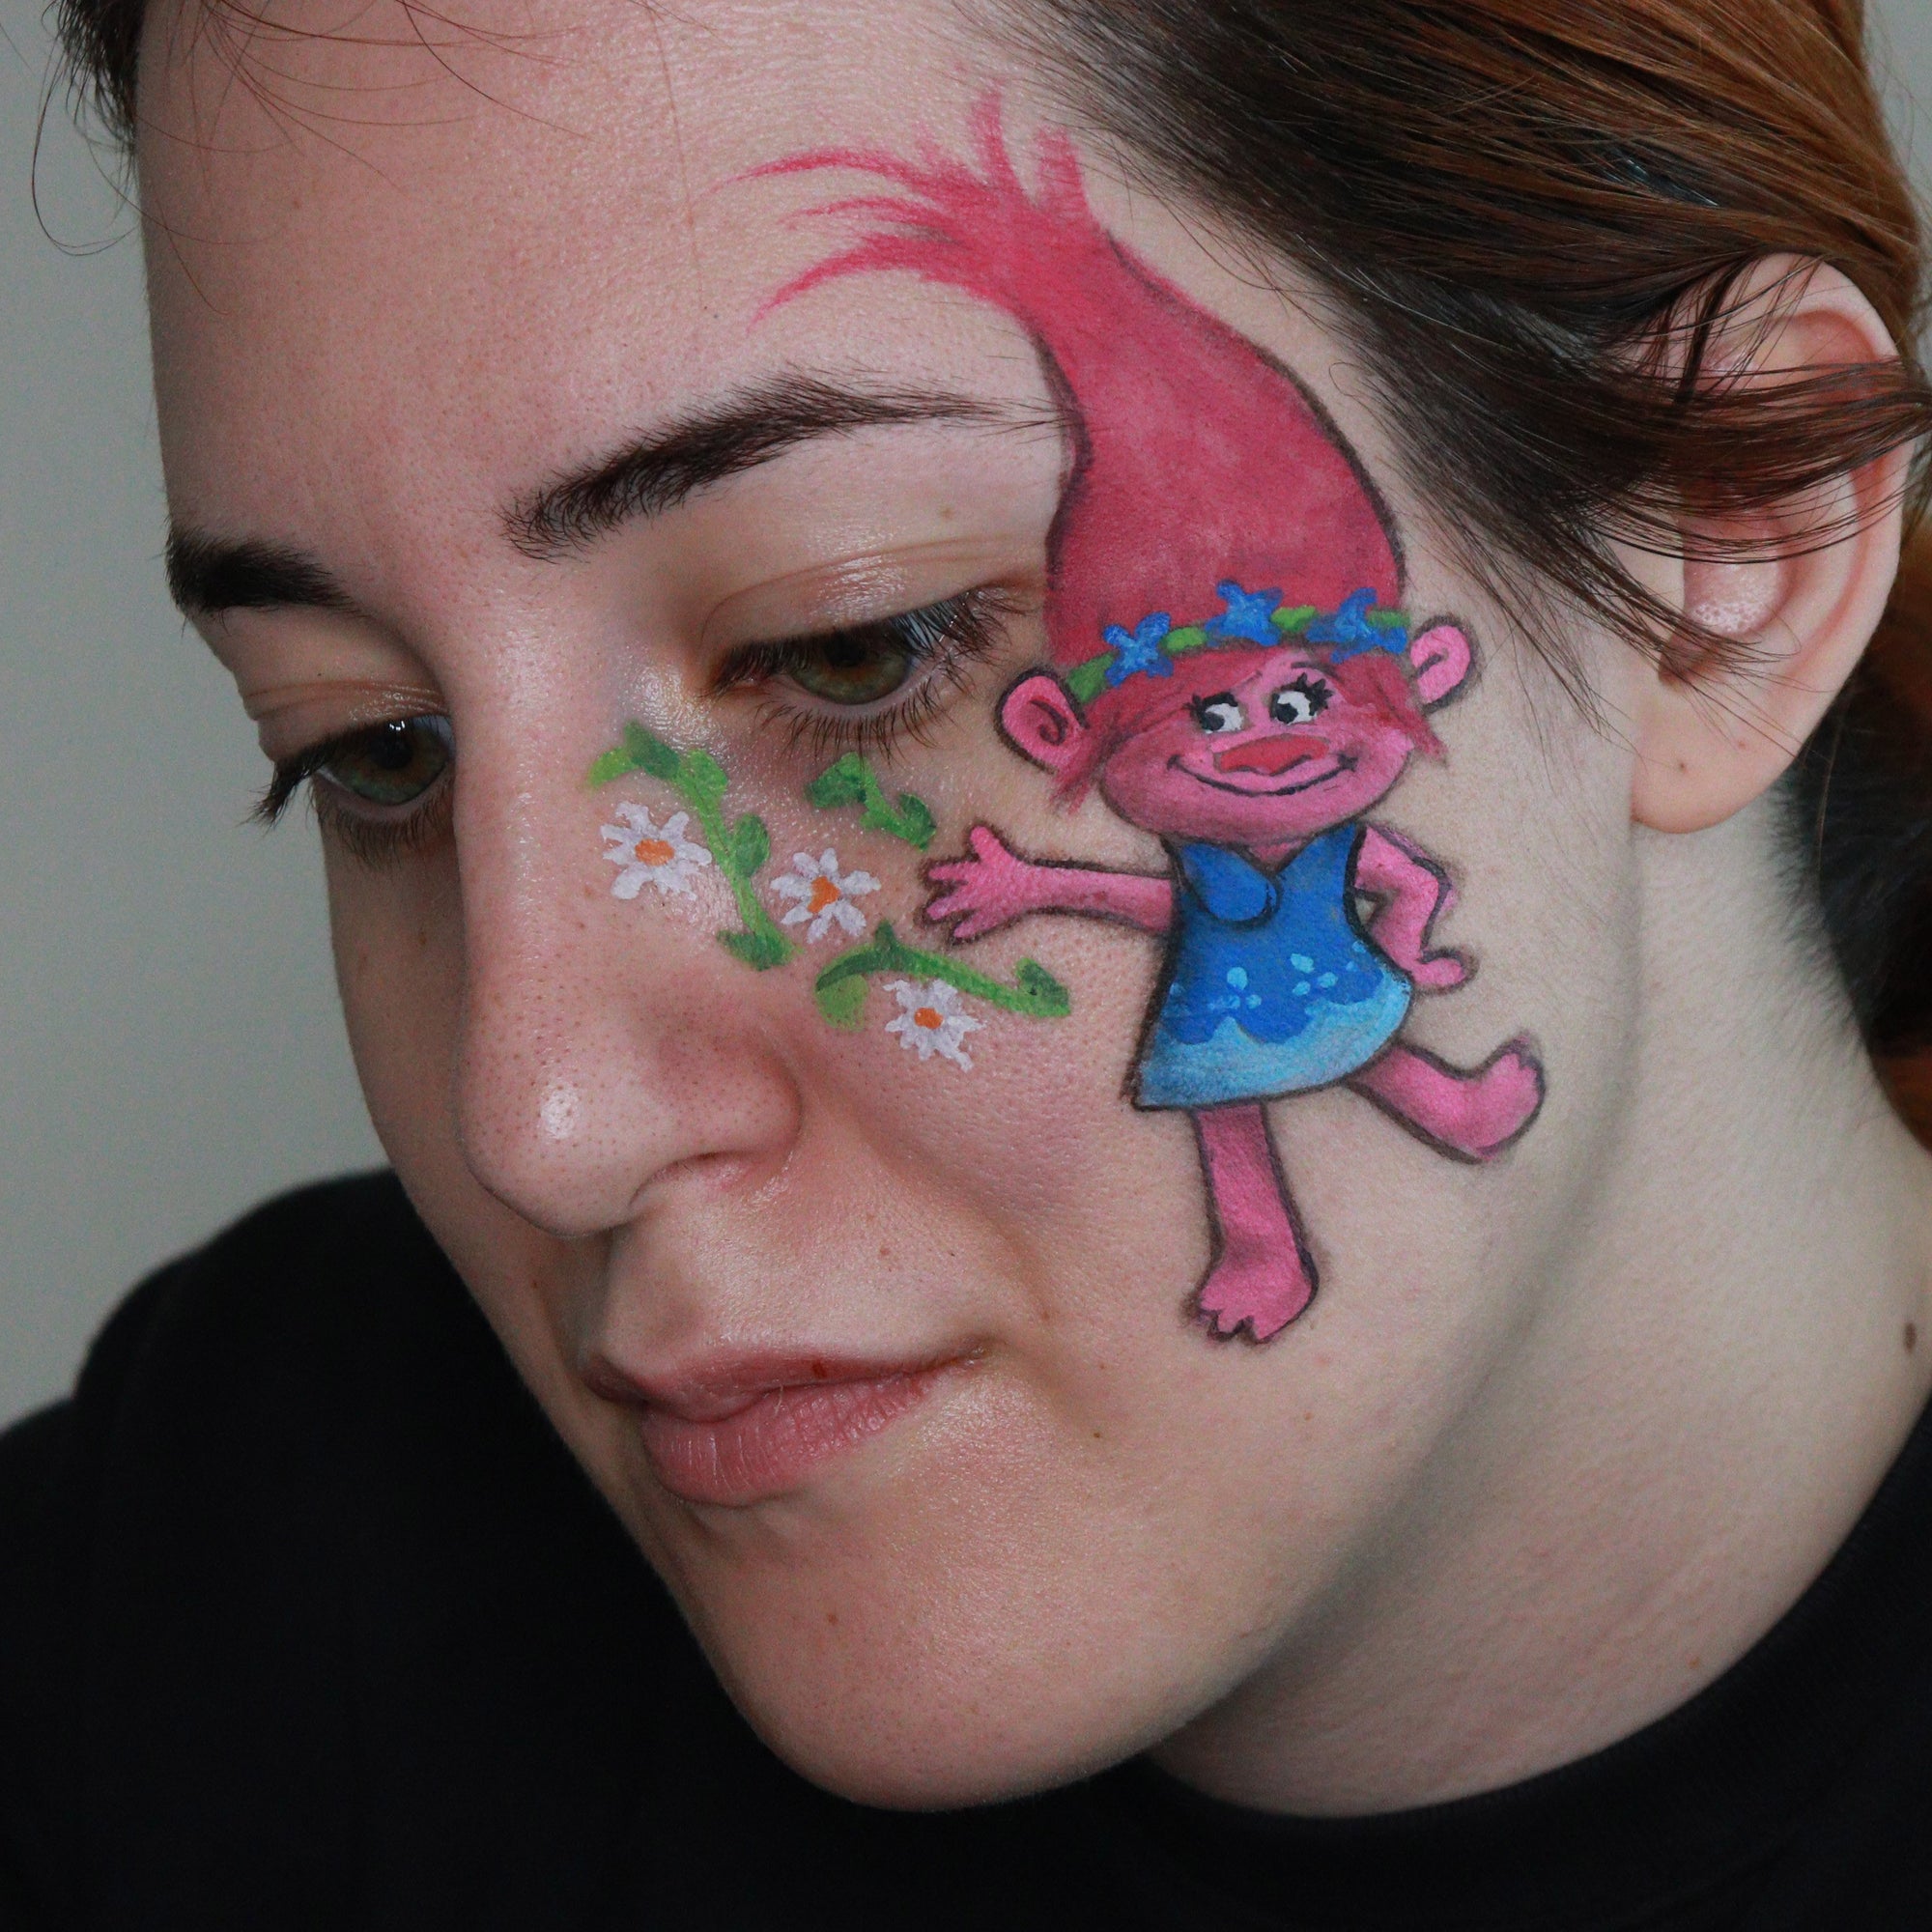 Trolls Movie Face Paint Design by Ana Cedoviste